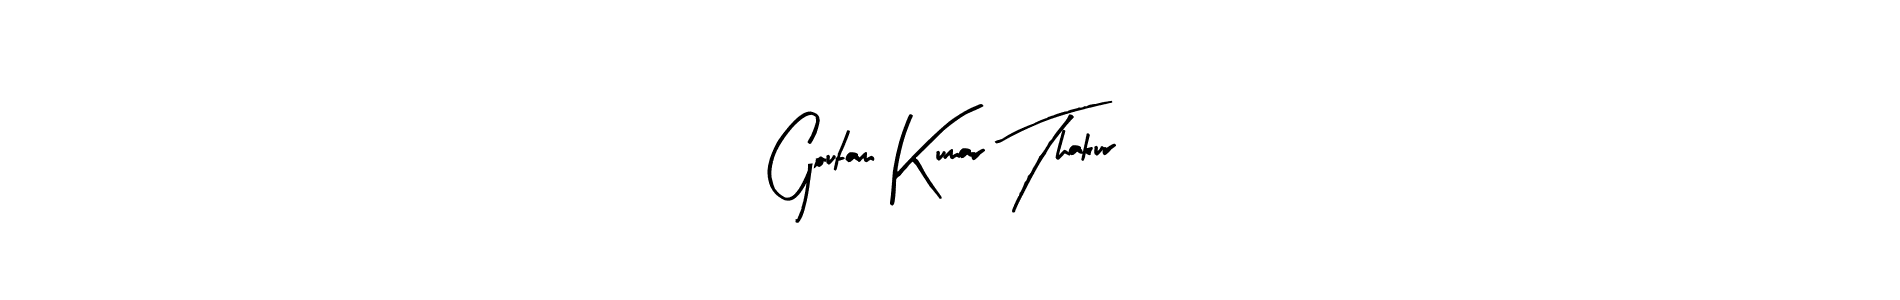 How to Draw Goutam Kumar Thakur signature style? Arty Signature is a latest design signature styles for name Goutam Kumar Thakur. Goutam Kumar Thakur signature style 8 images and pictures png